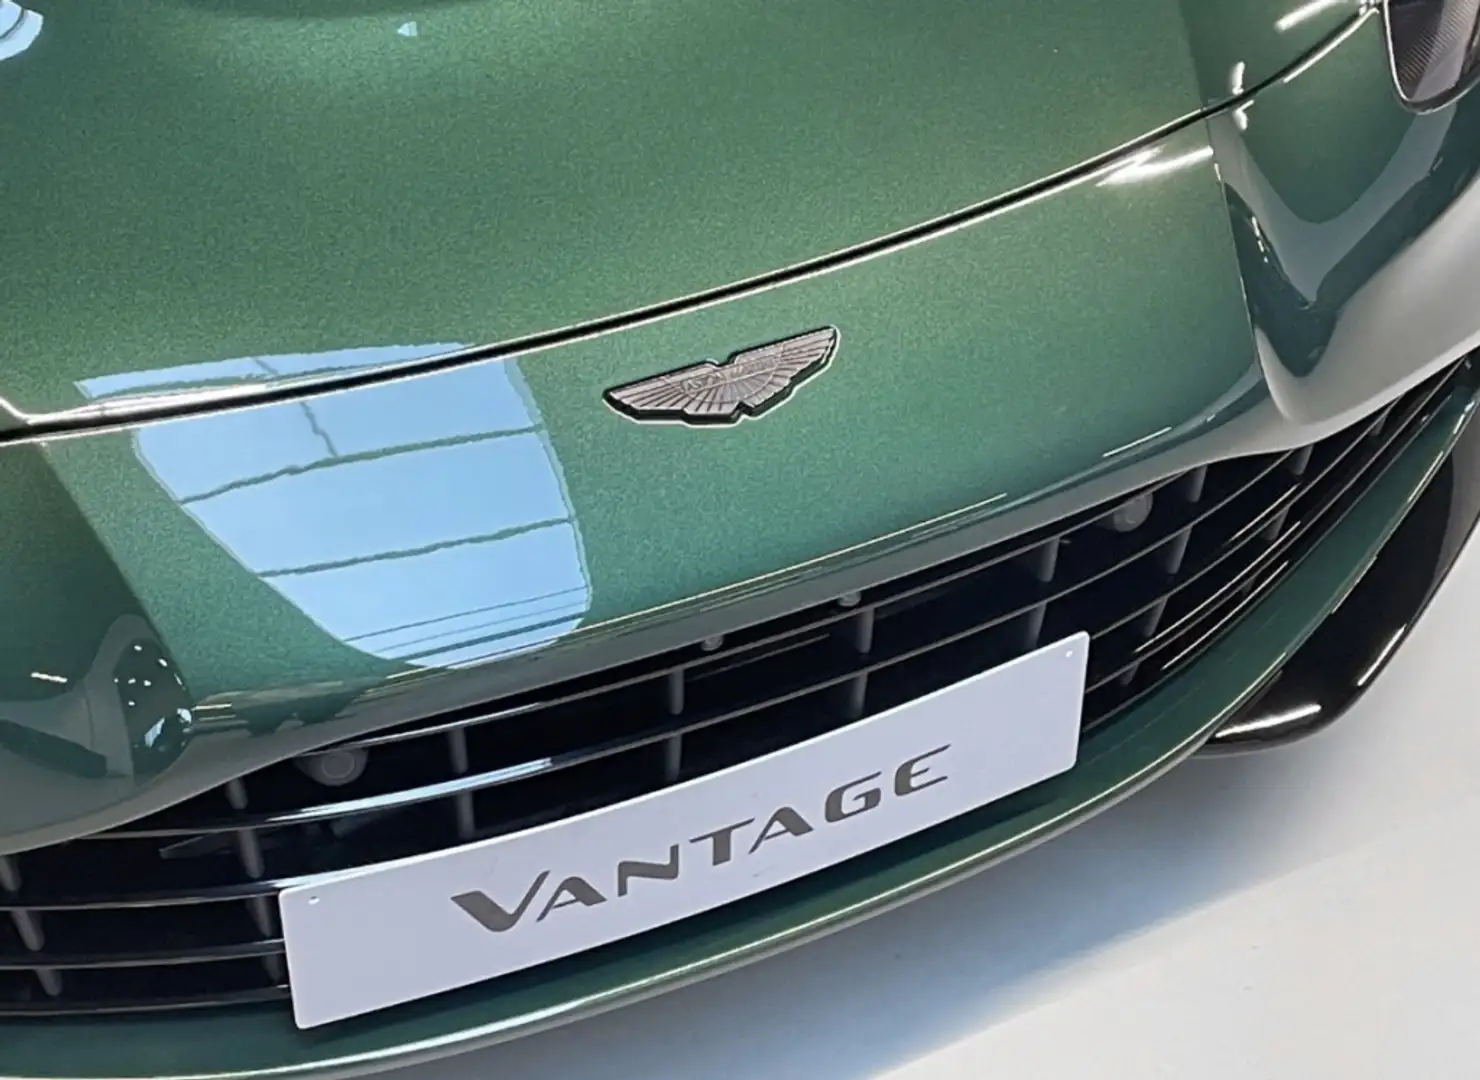 Aston Martin Vantage Roadster - 1